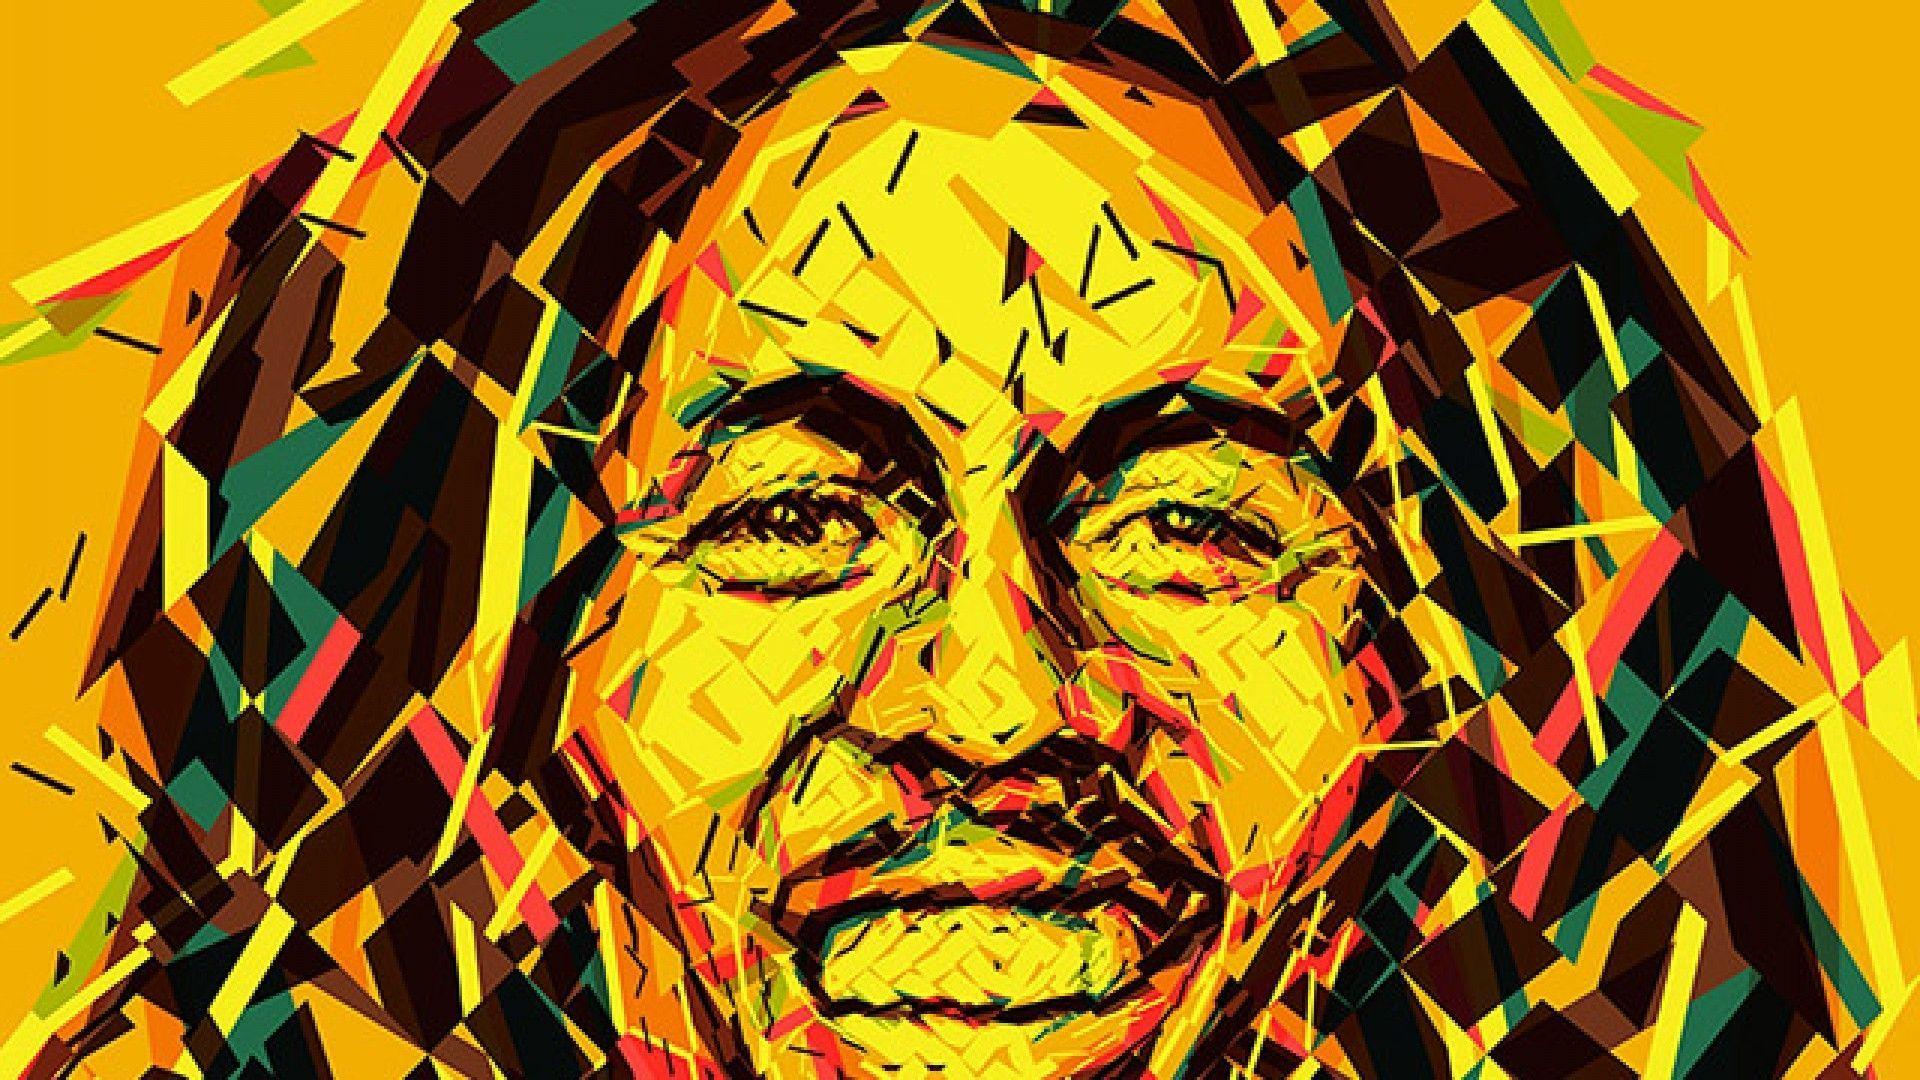 HDQ Beautiful Bob Marley Image & Wallpaper for PC & Mac, Laptop